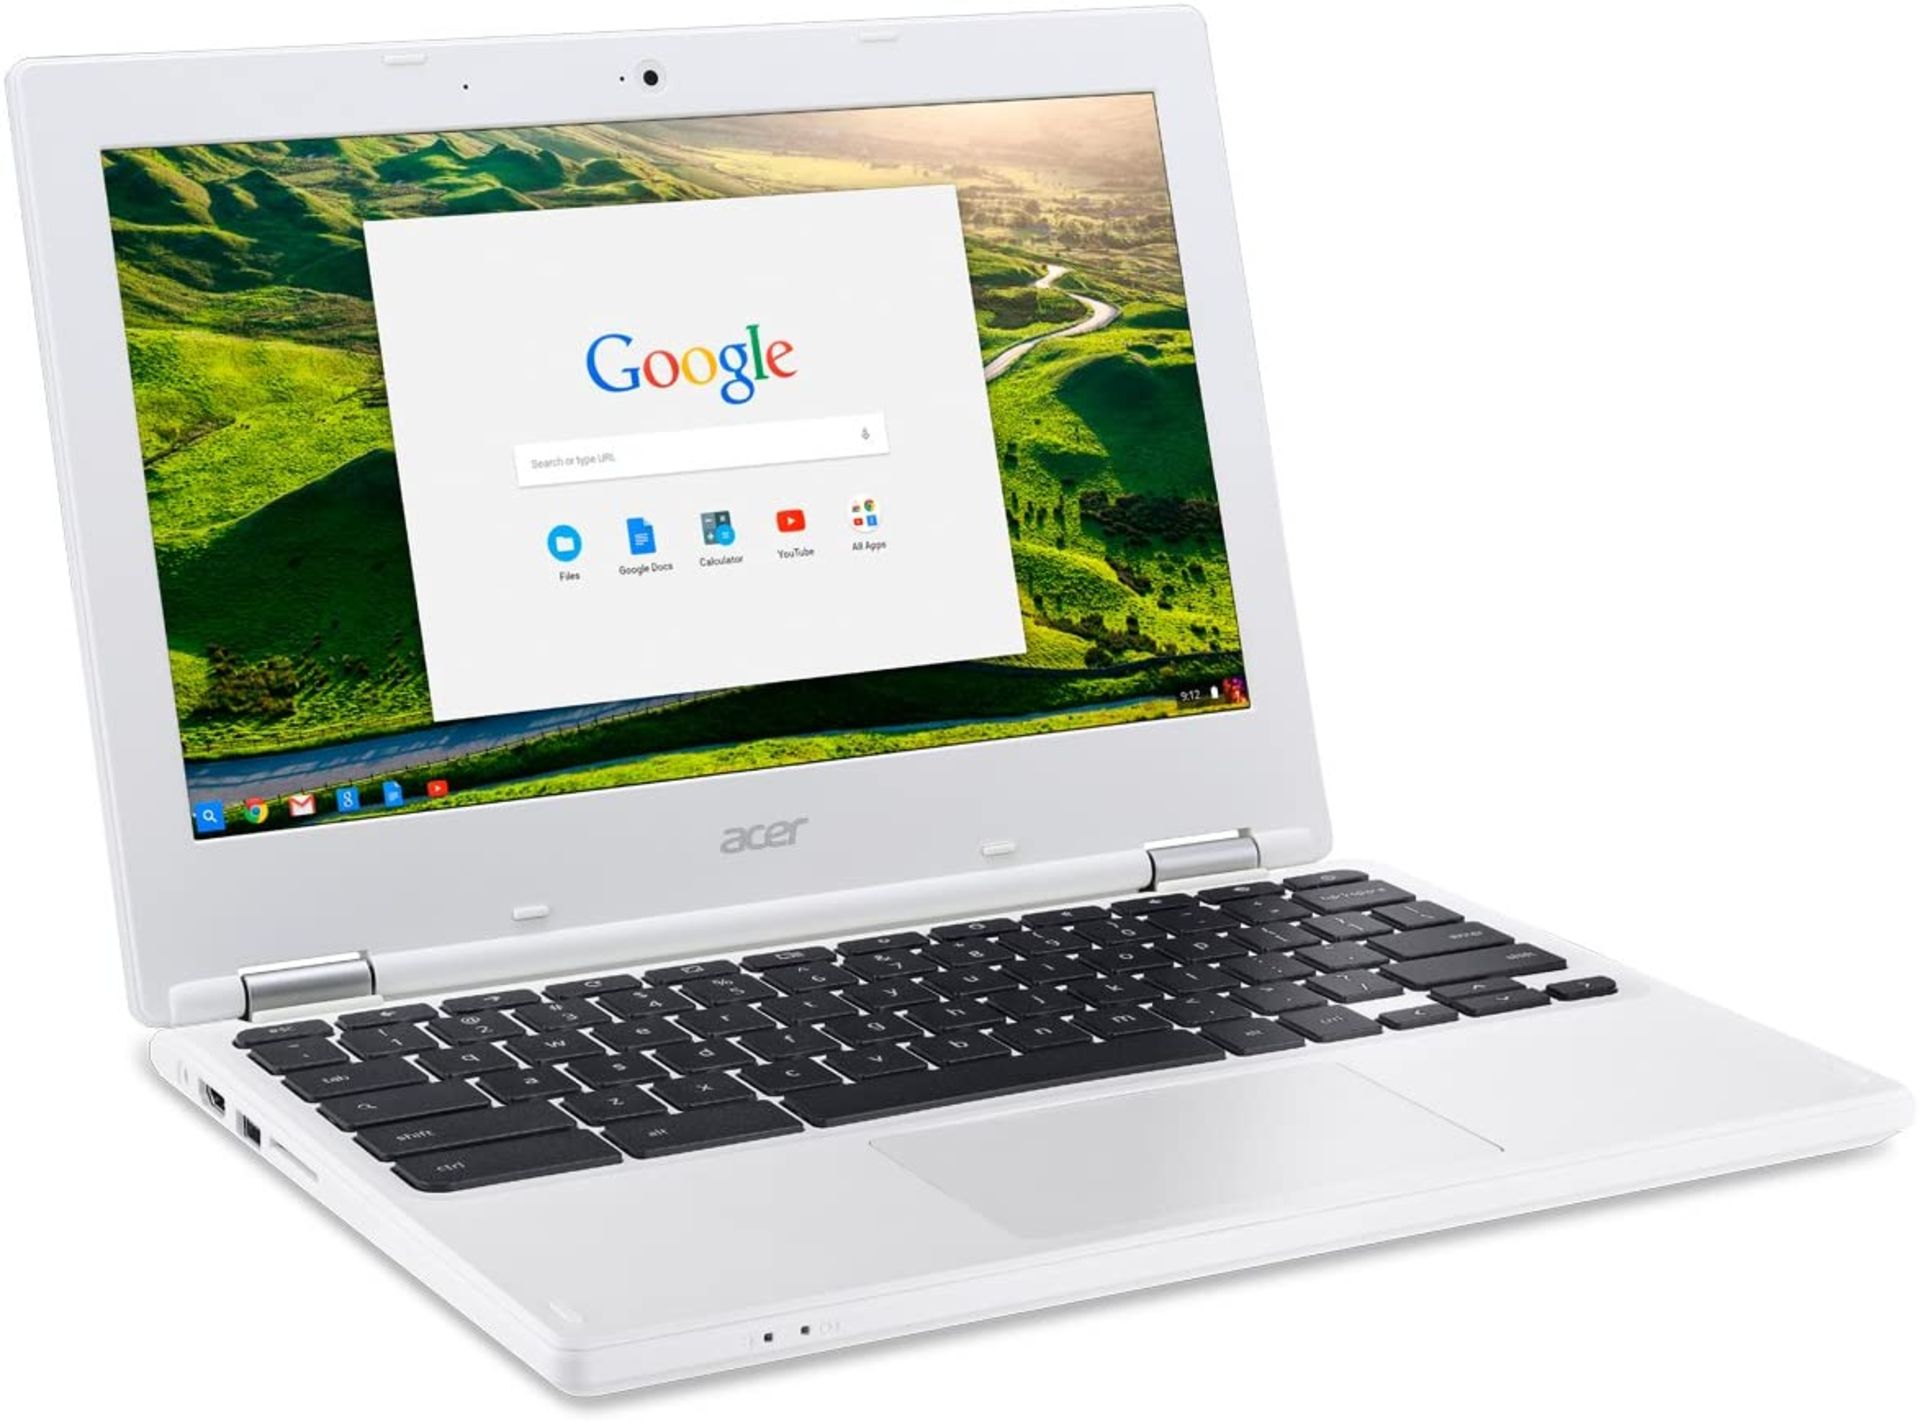 (M5) Acer Chromebook 11.6 inches Laptop CB3-131 Intel Celeron N2840 2 GB 16GB EMMC Chrome White... - Image 2 of 4